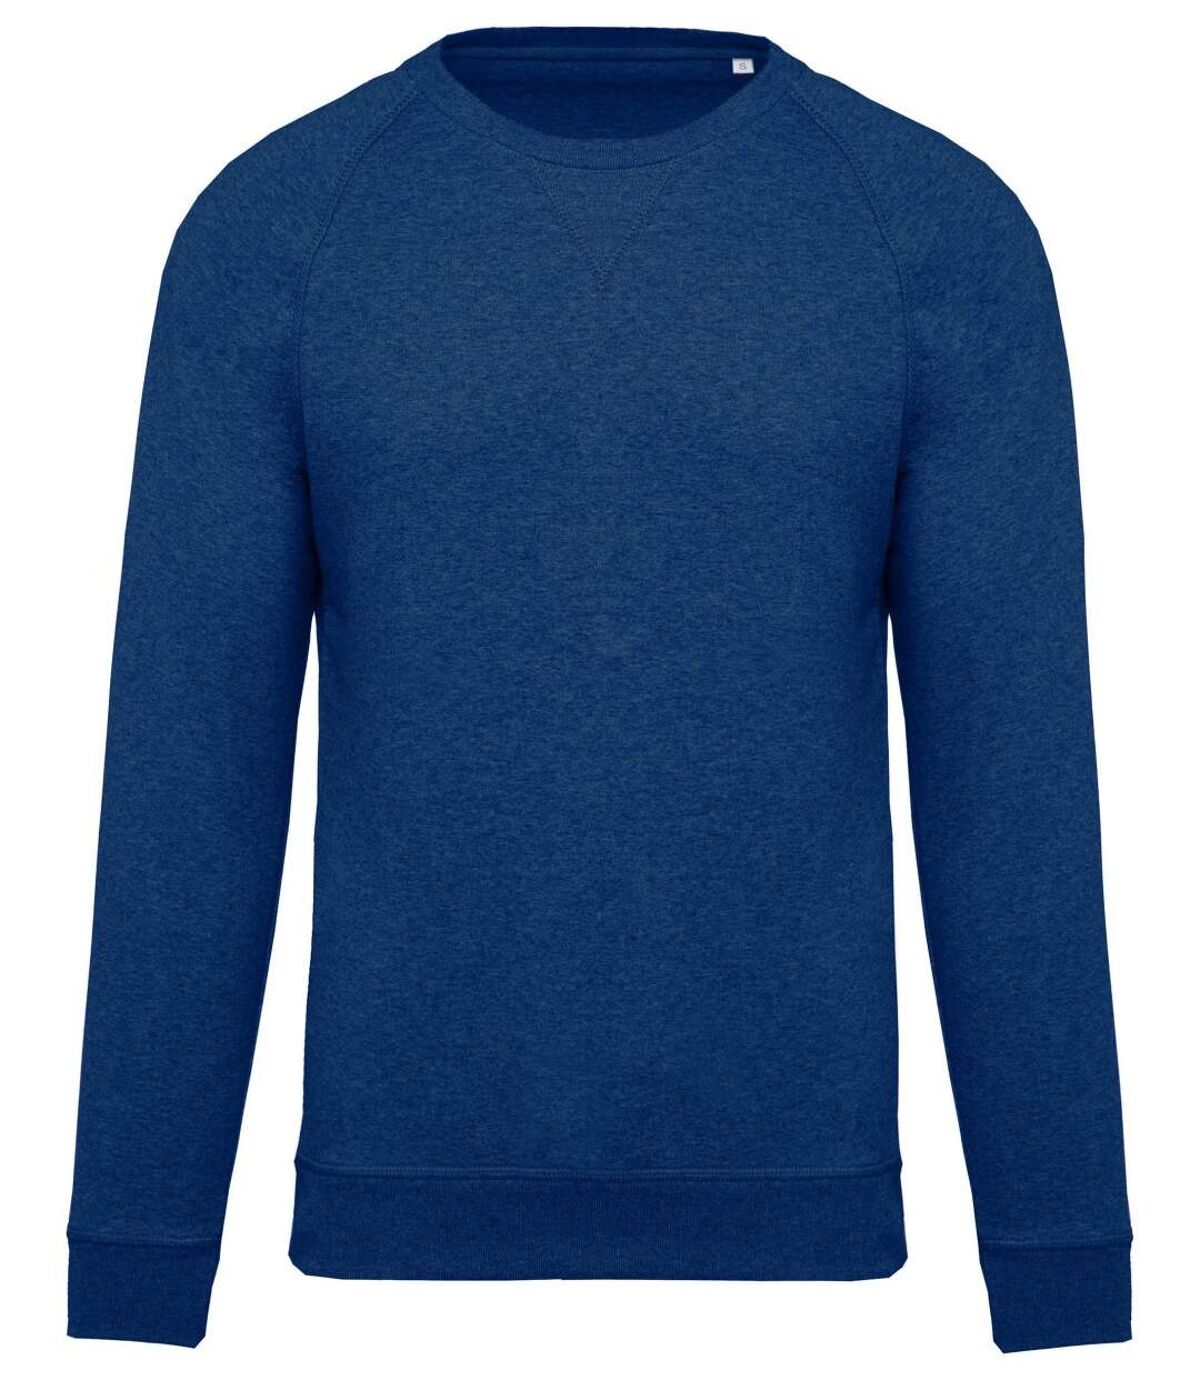 Sweat shirt coton bio - Homme - K480 - bleu océan chiné